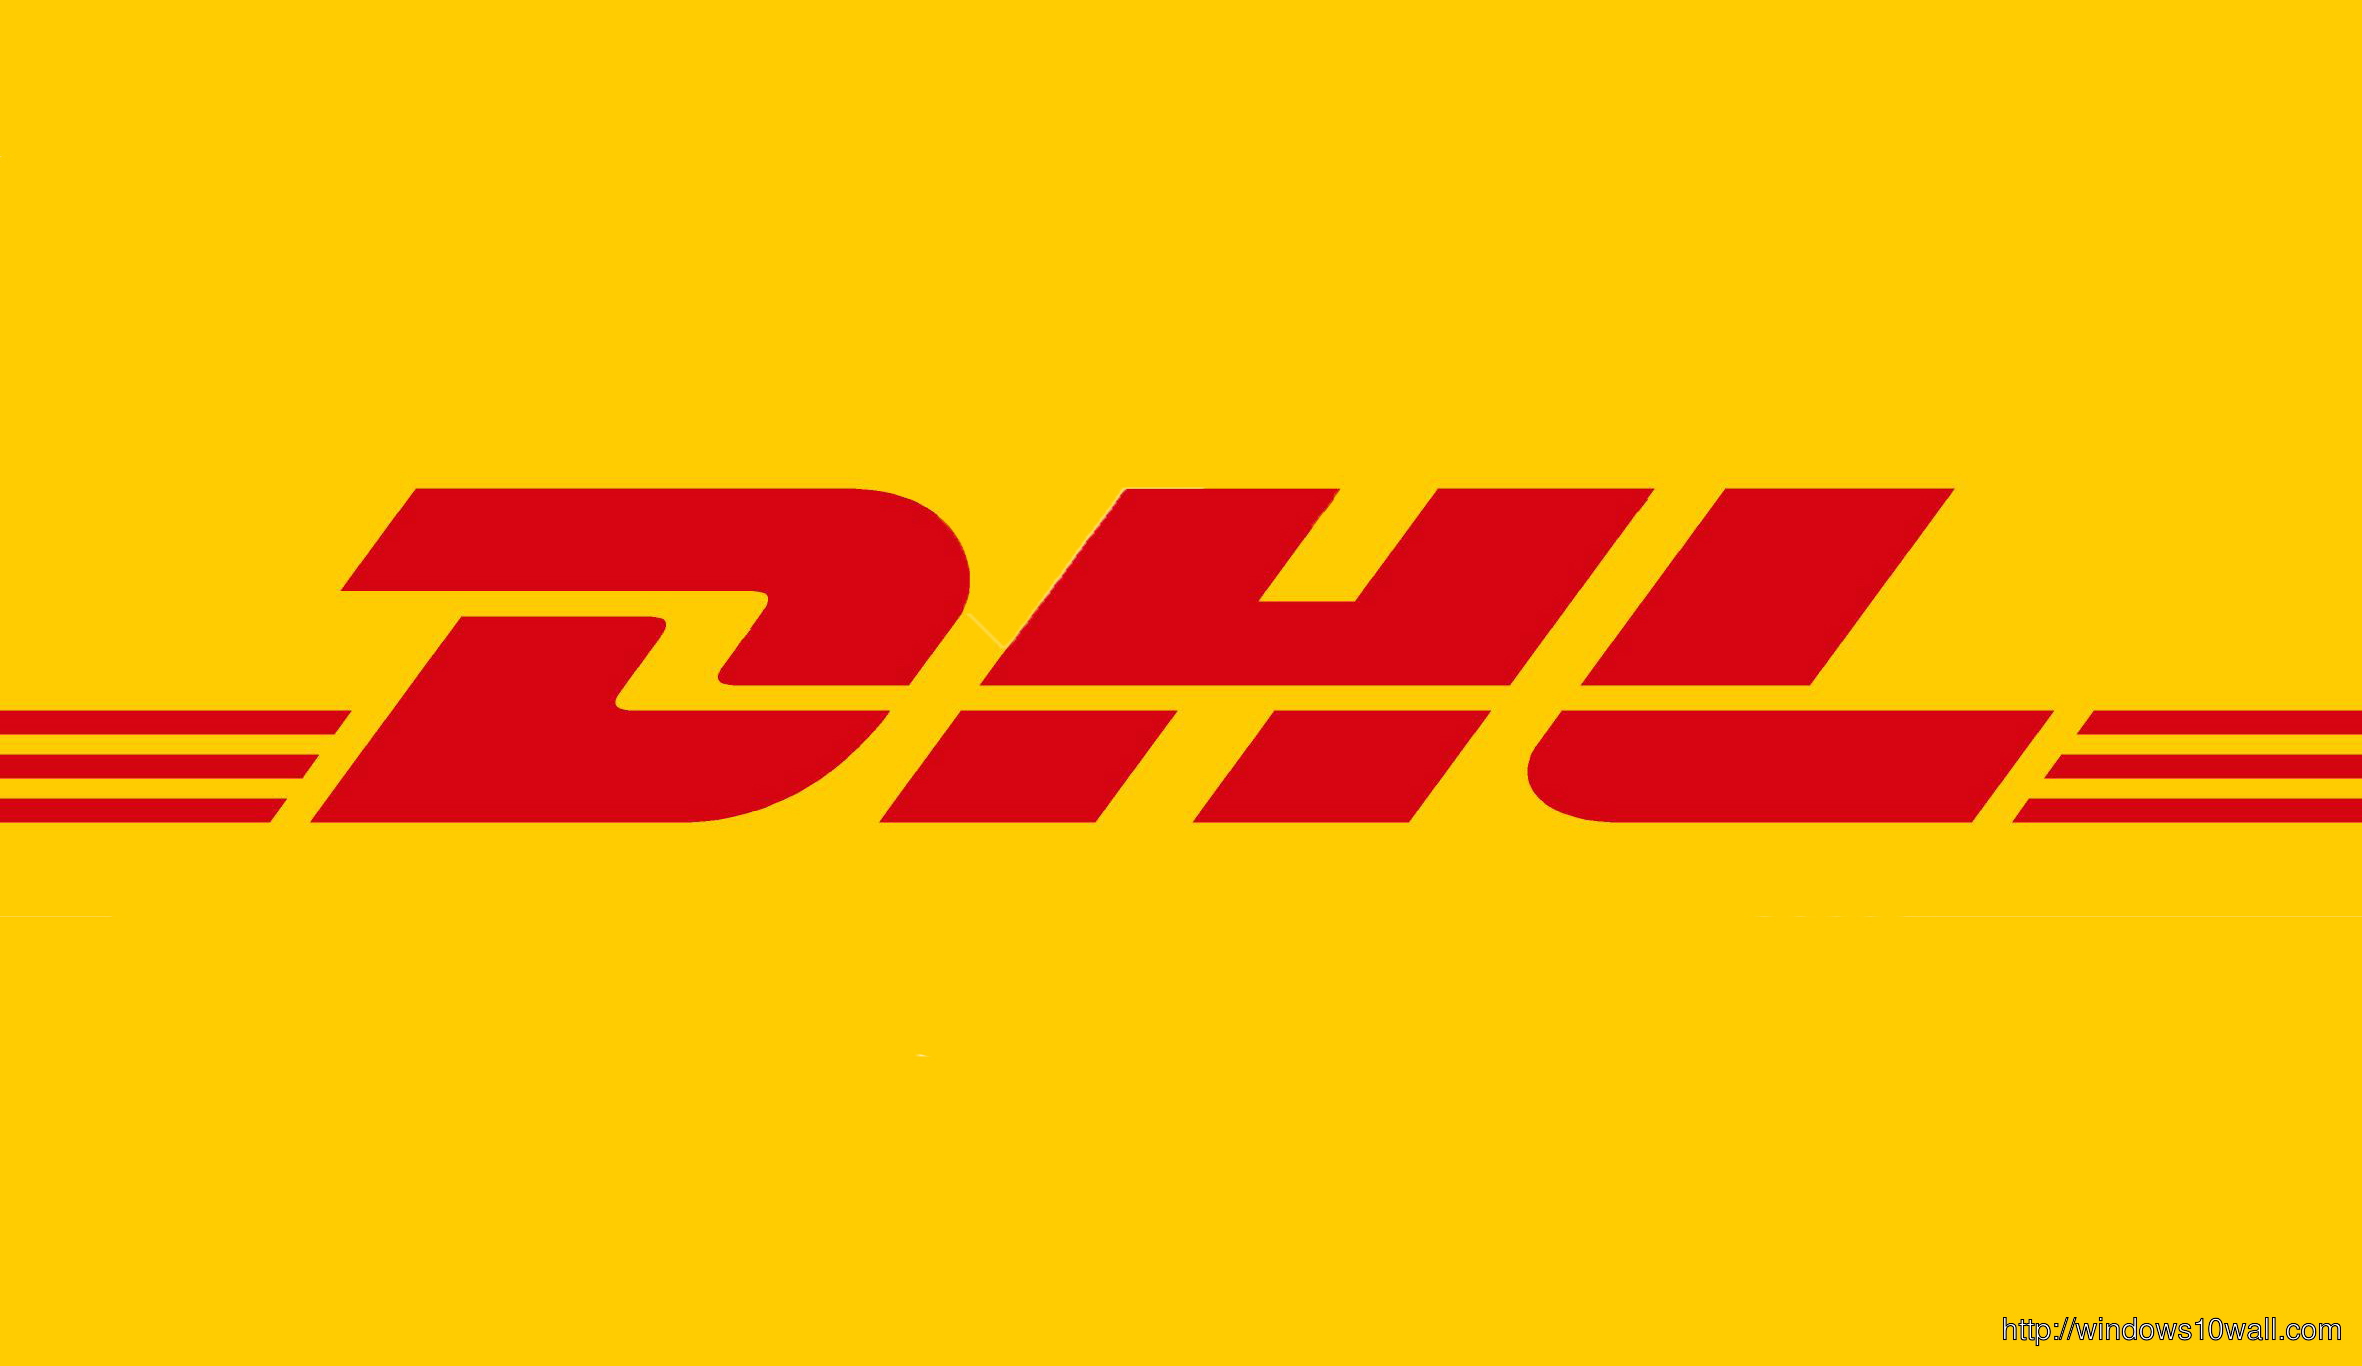 Dhl Express Yellow Logo Desktop Background Wallpaper